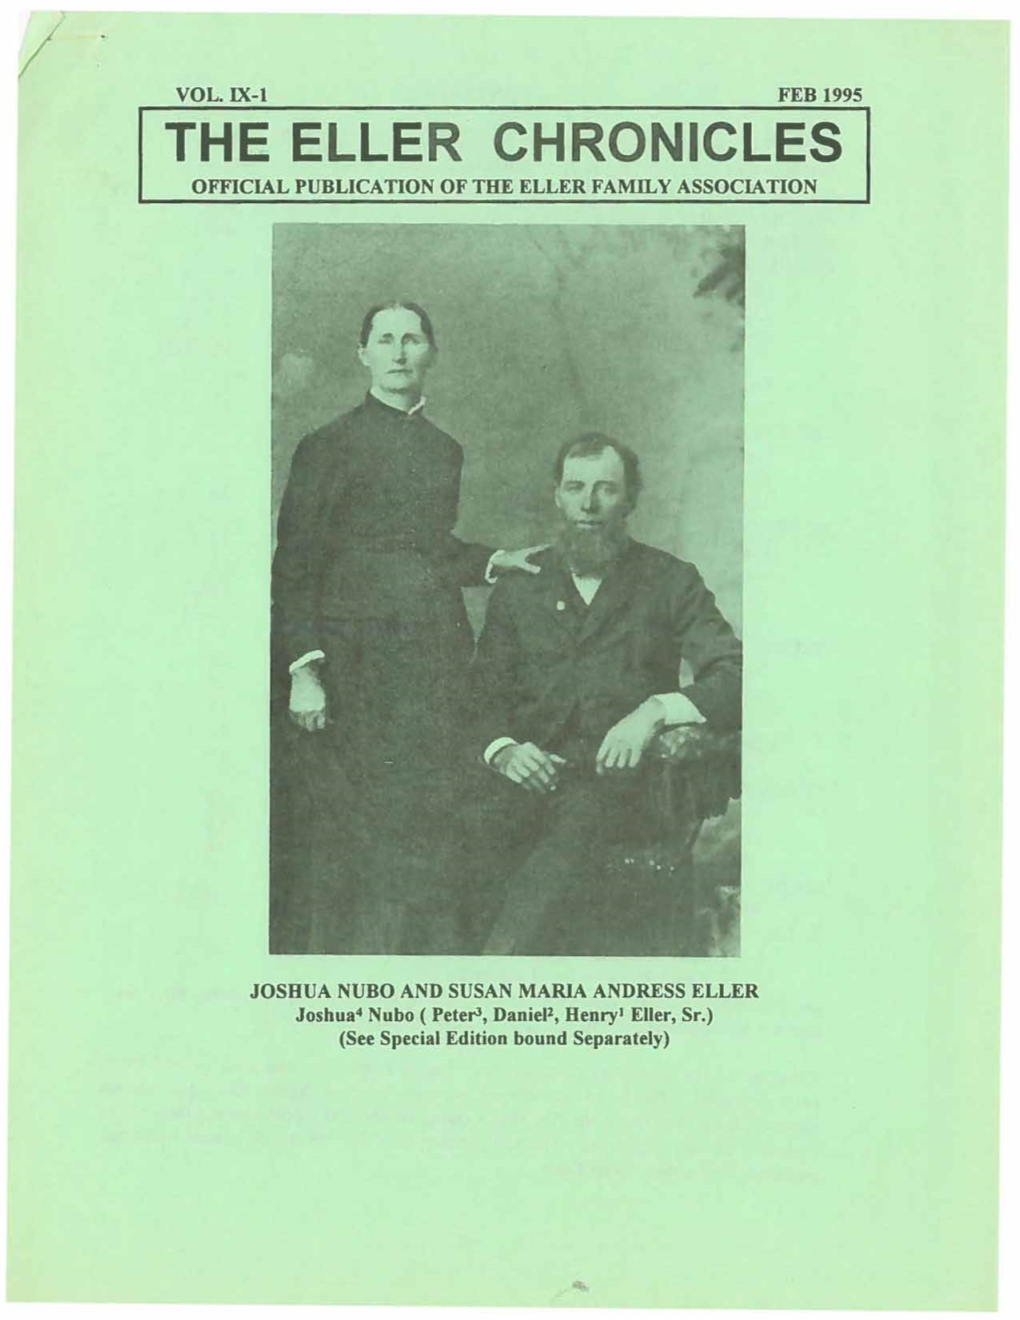 The Eller Chronicles Official Publication of the Eller Family Association